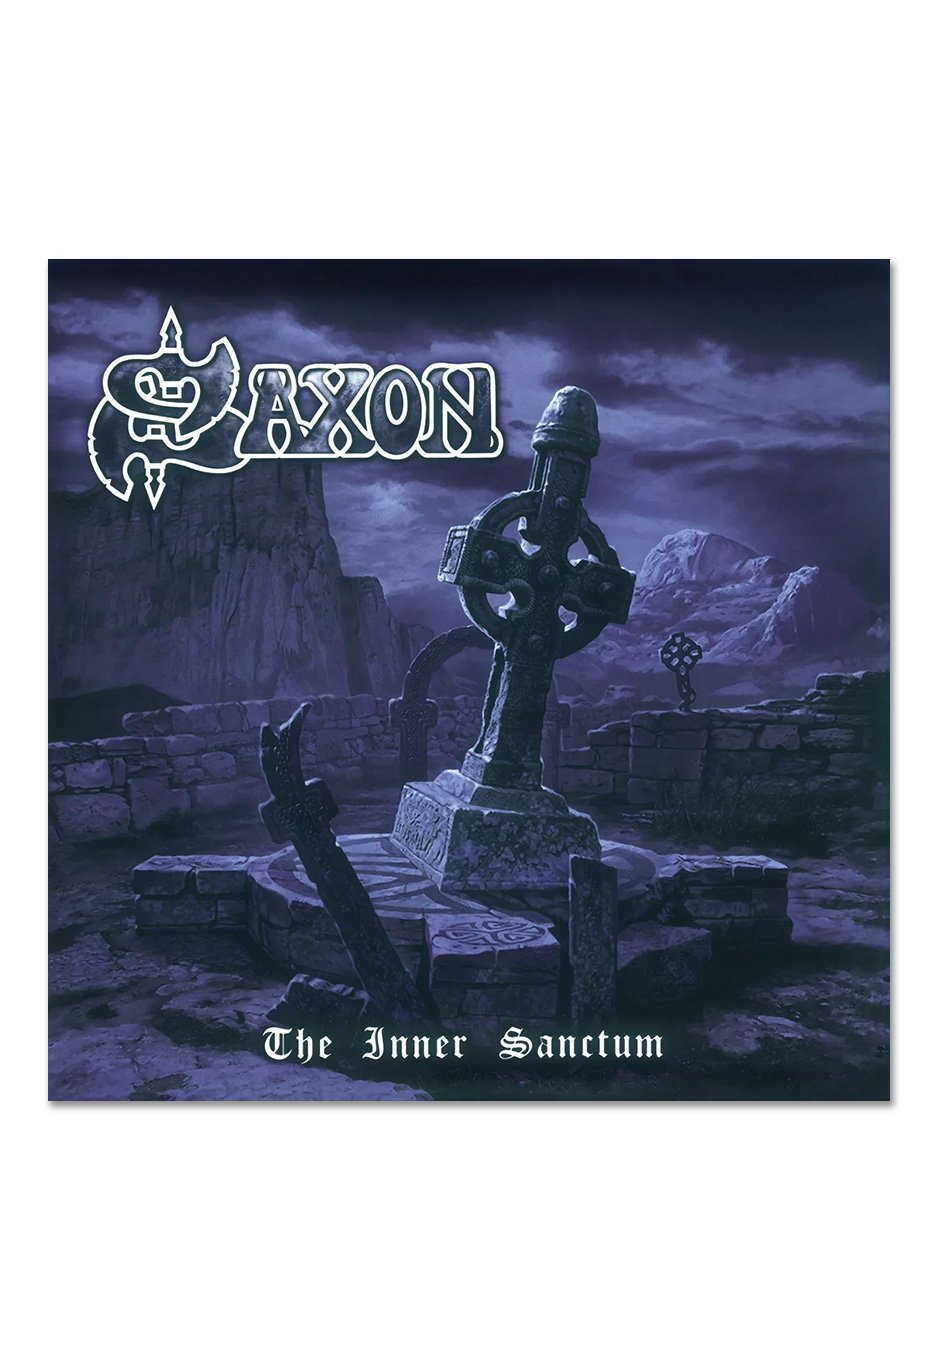 Saxon - The Inner Sanctum Ltd. Silver - Colored Vinyl | Neutral-Image